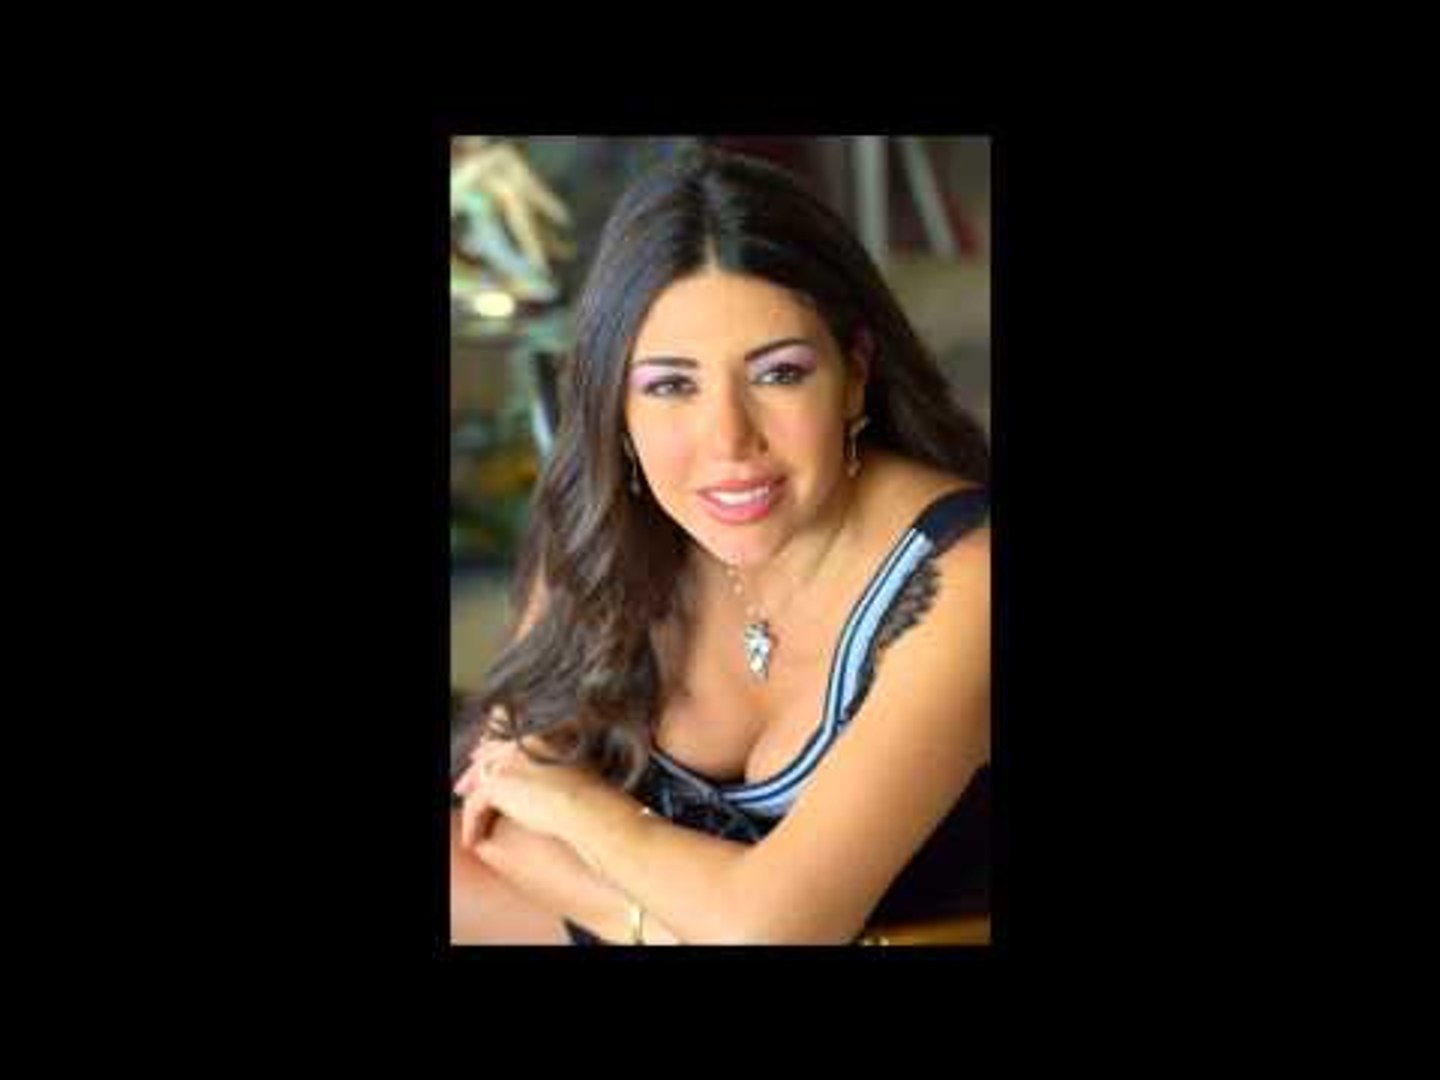 Laura Khalil - Jari ya hammouda - جاري يا حمودة - لورا خليل - فيديو  Dailymotion